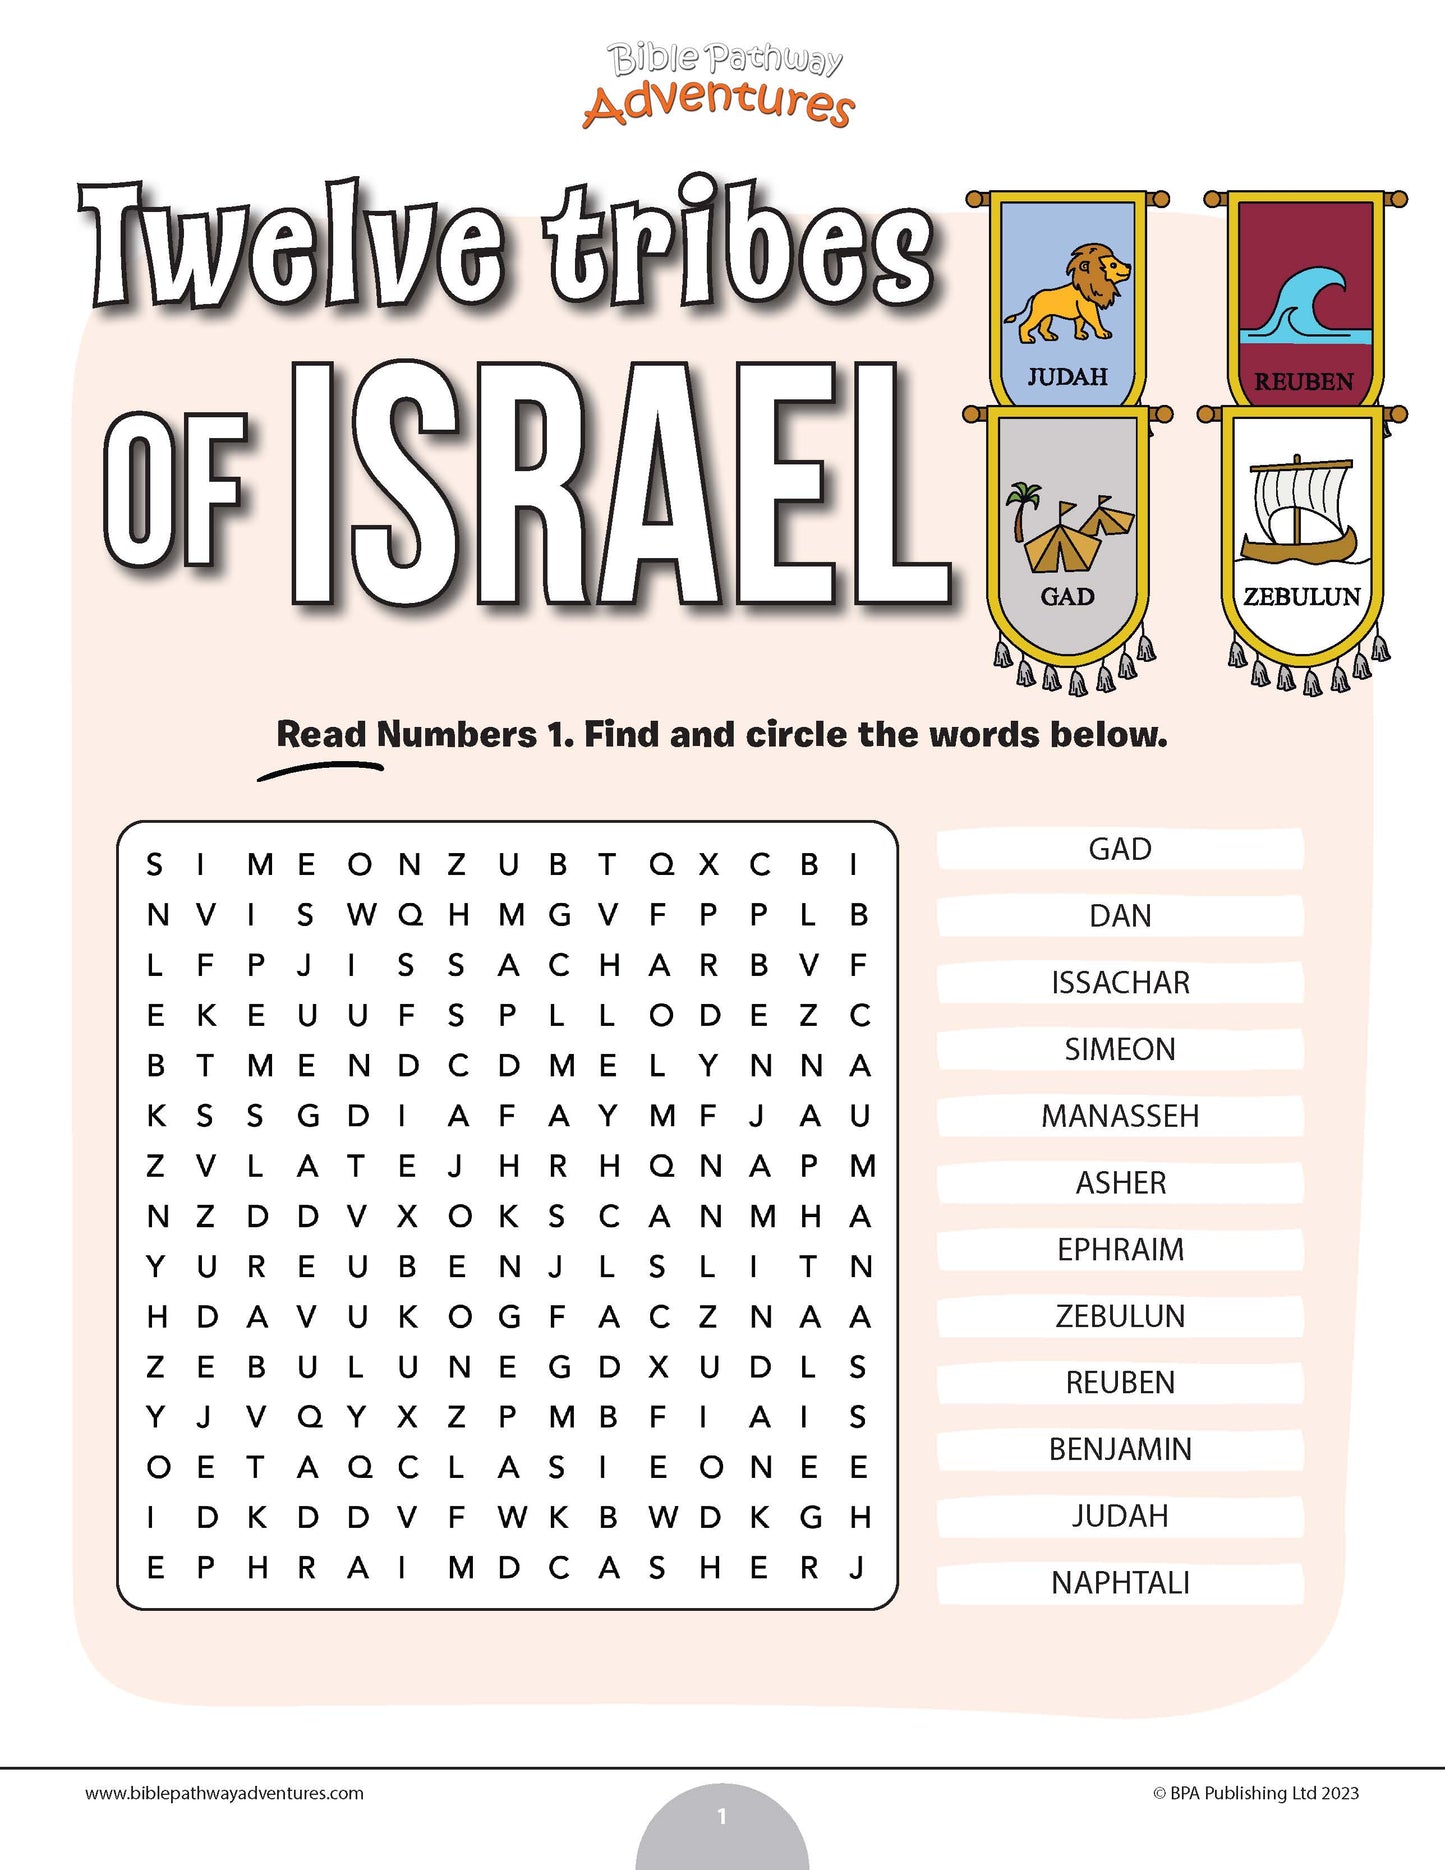 Twelve Tribes of Israel word search